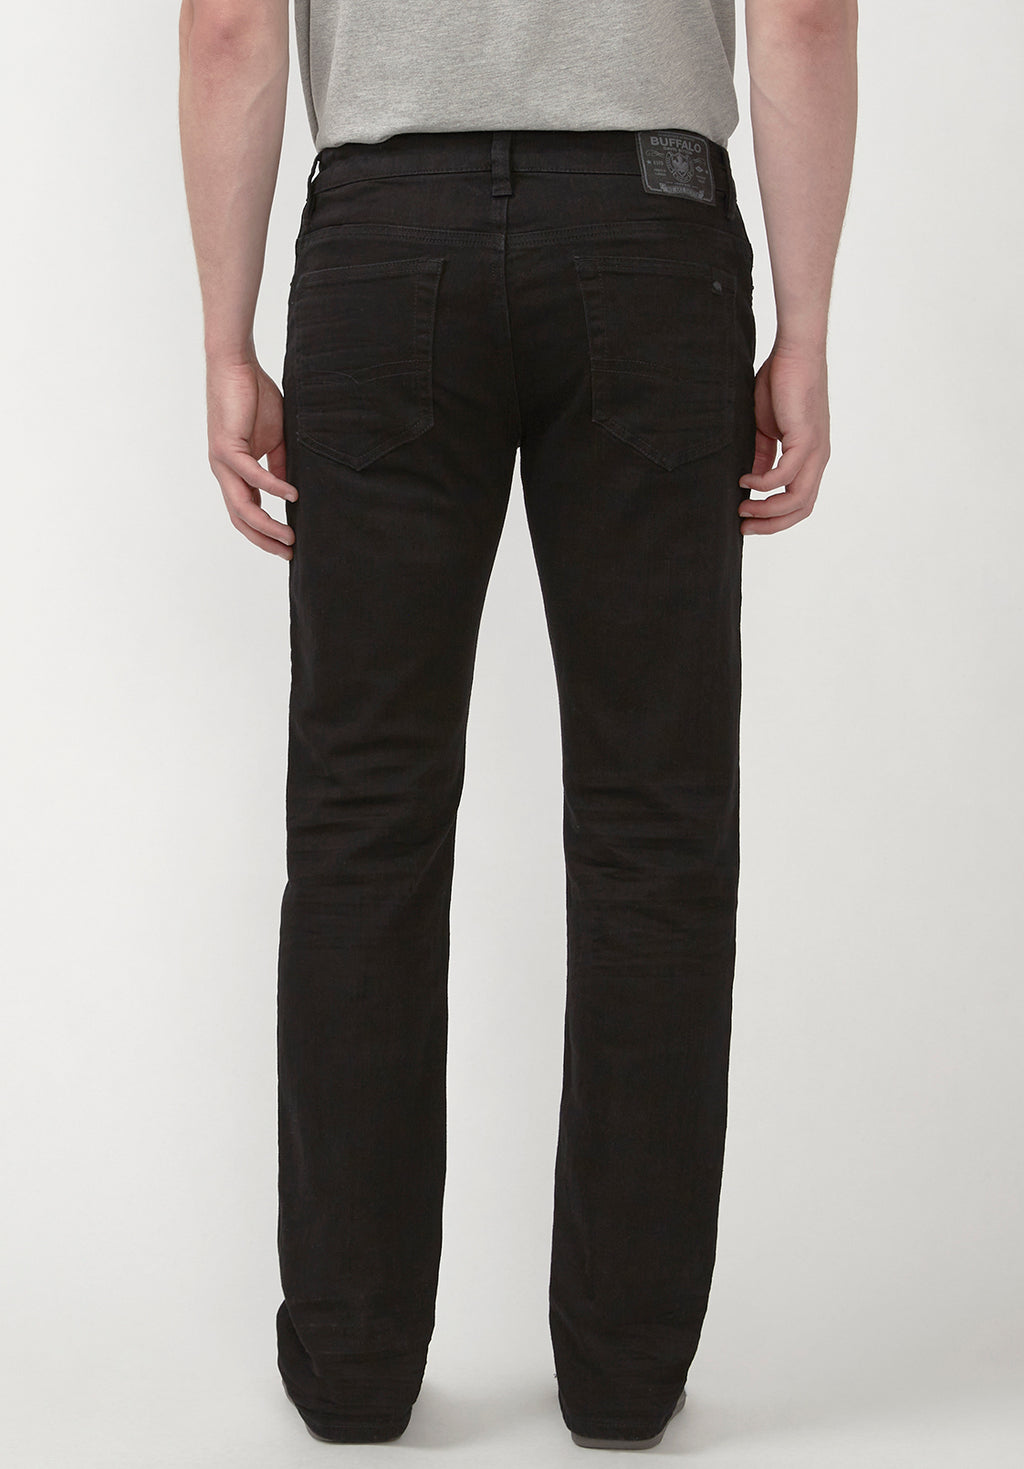 Straight Six Men's Jeans in Crinkled Black – Buffalo Jeans - US